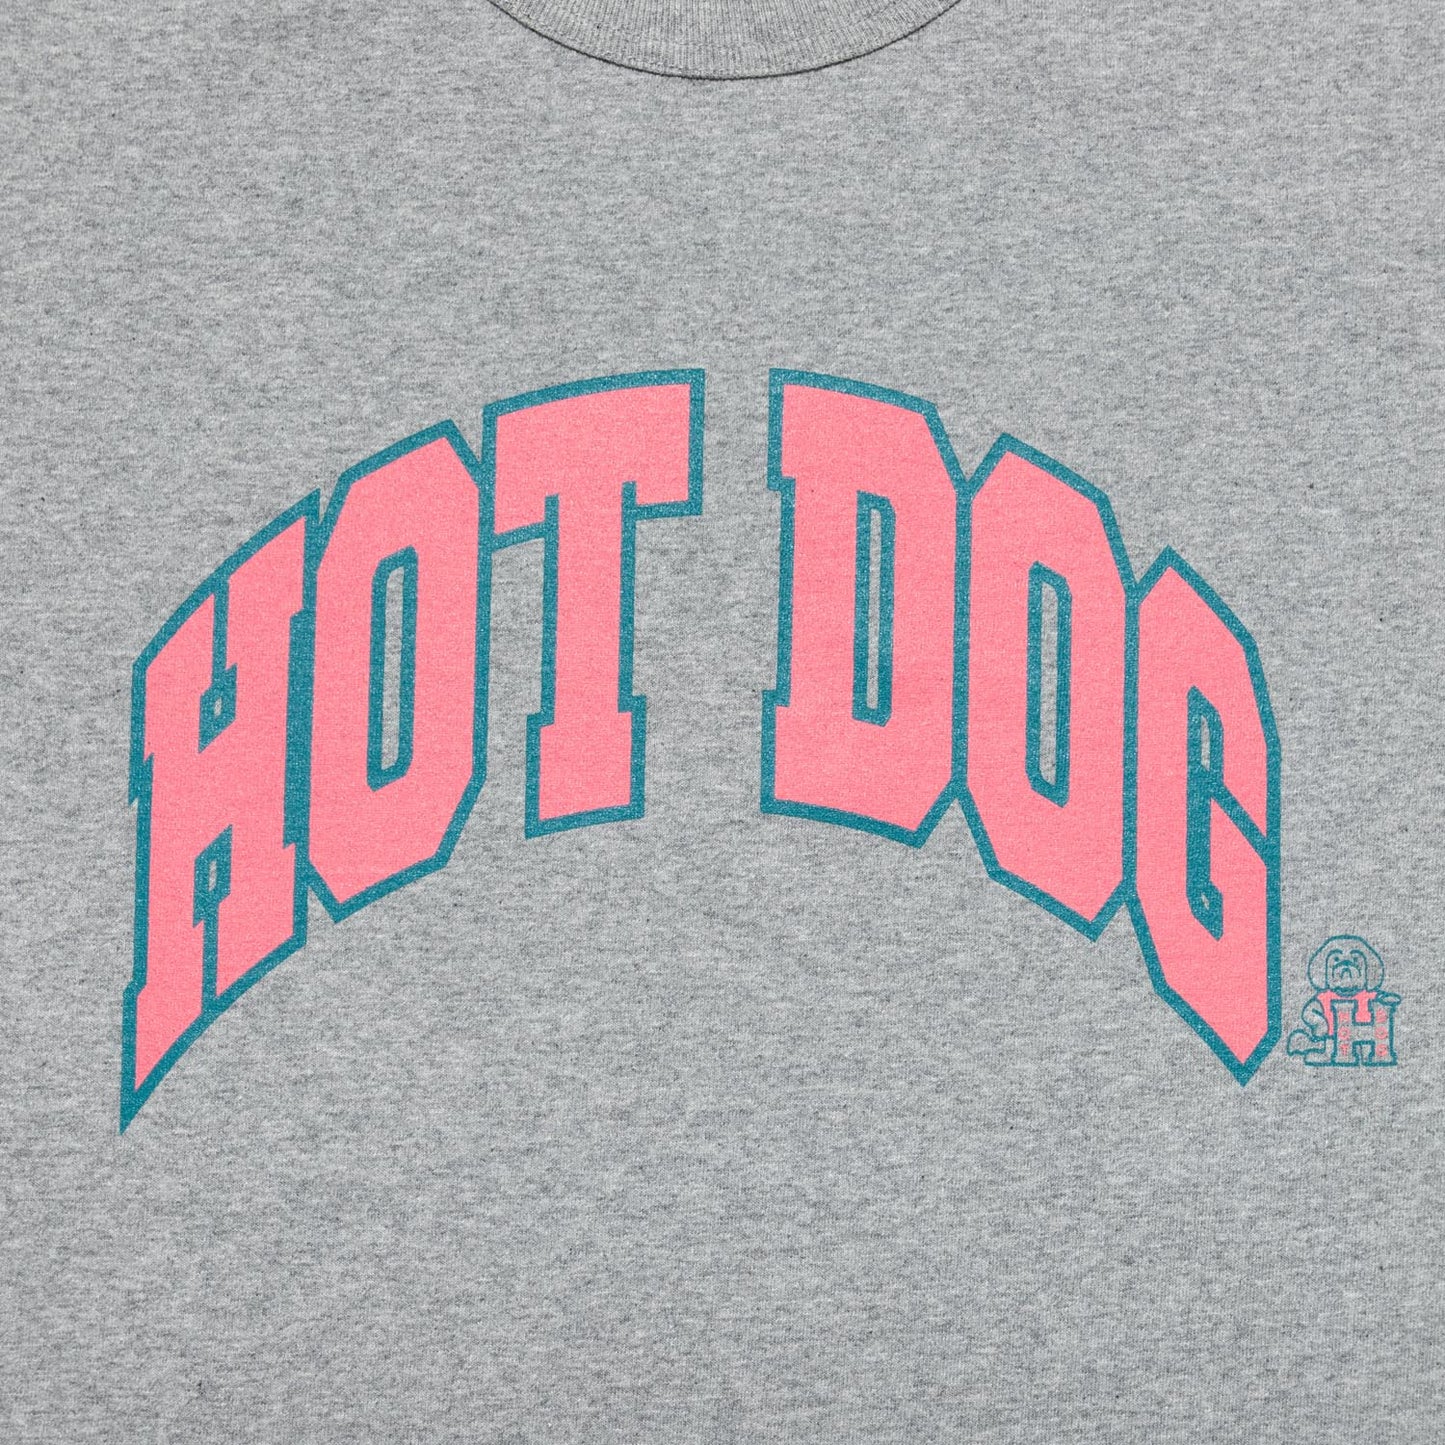 "HOT DOG COLLEGE LOGO / designed by Shuntaro Watanabe"